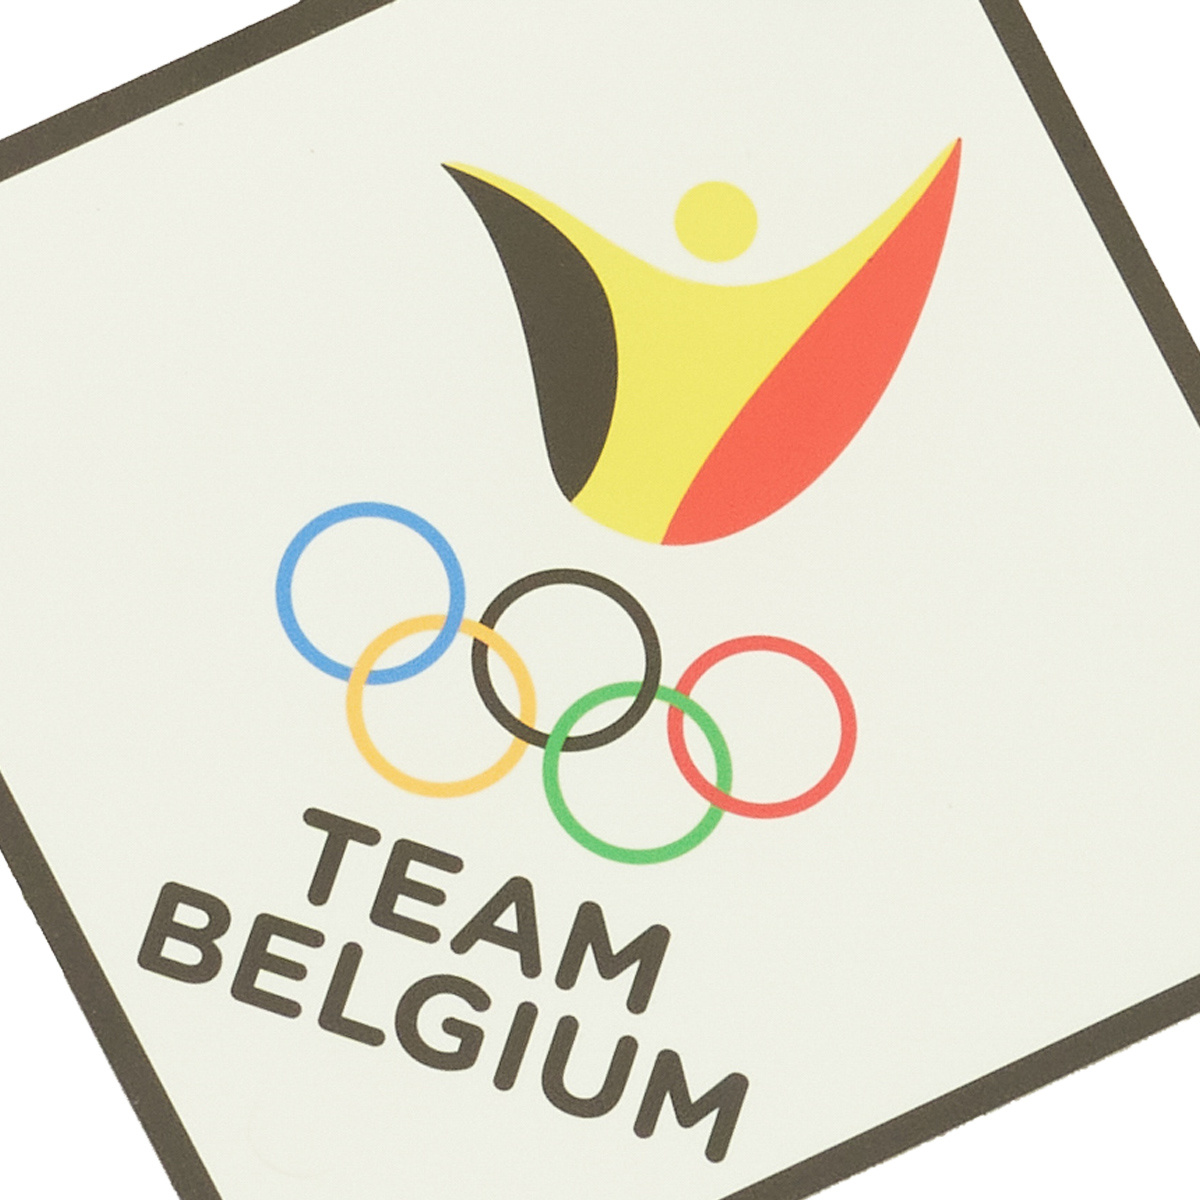 Auto teken Team Belgium